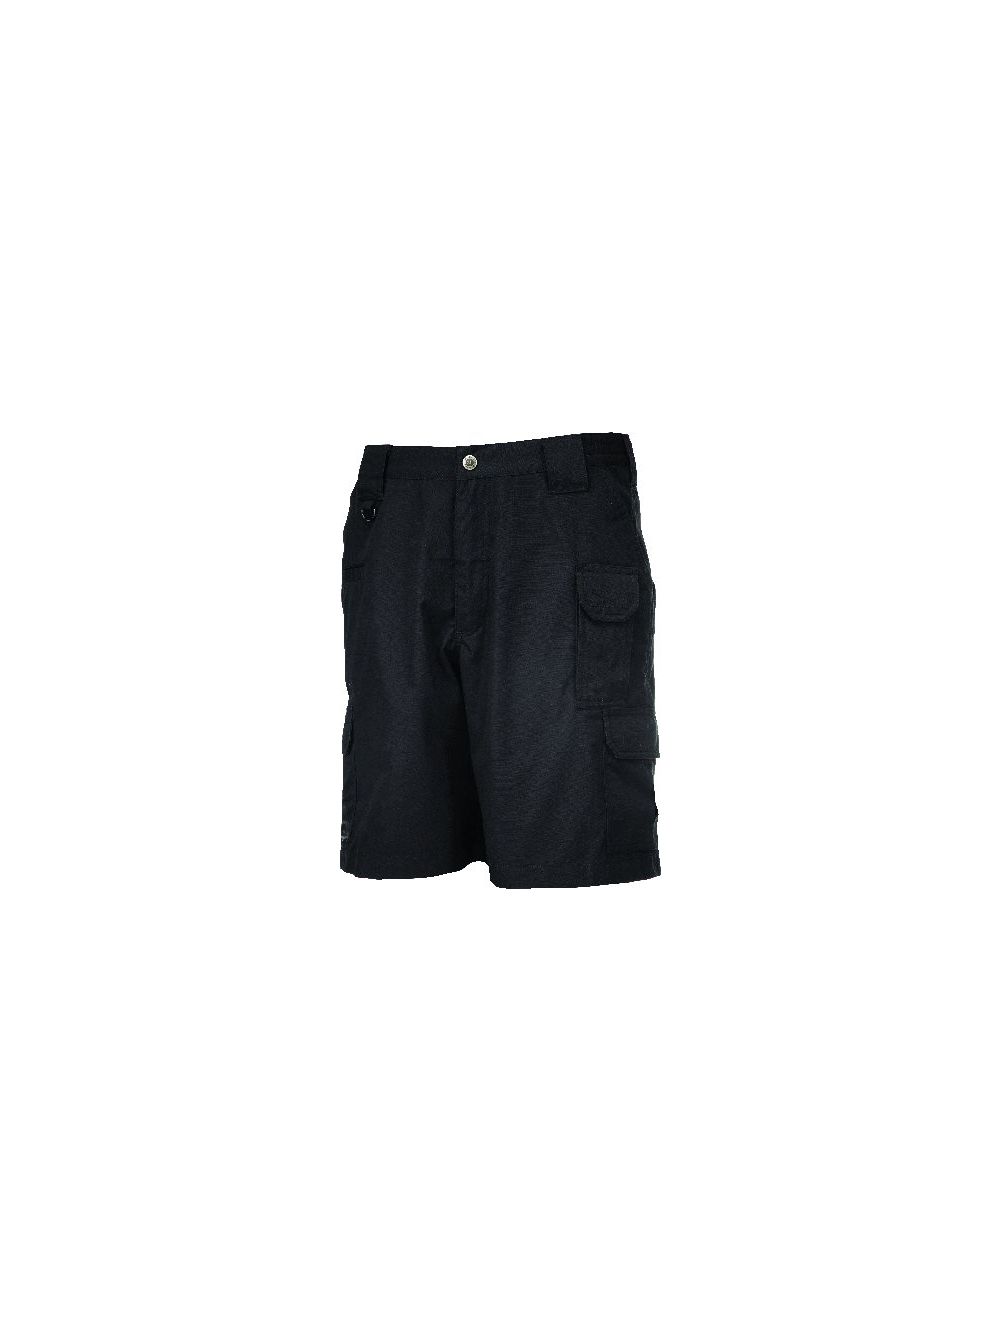 TACLITE Pro Shorts